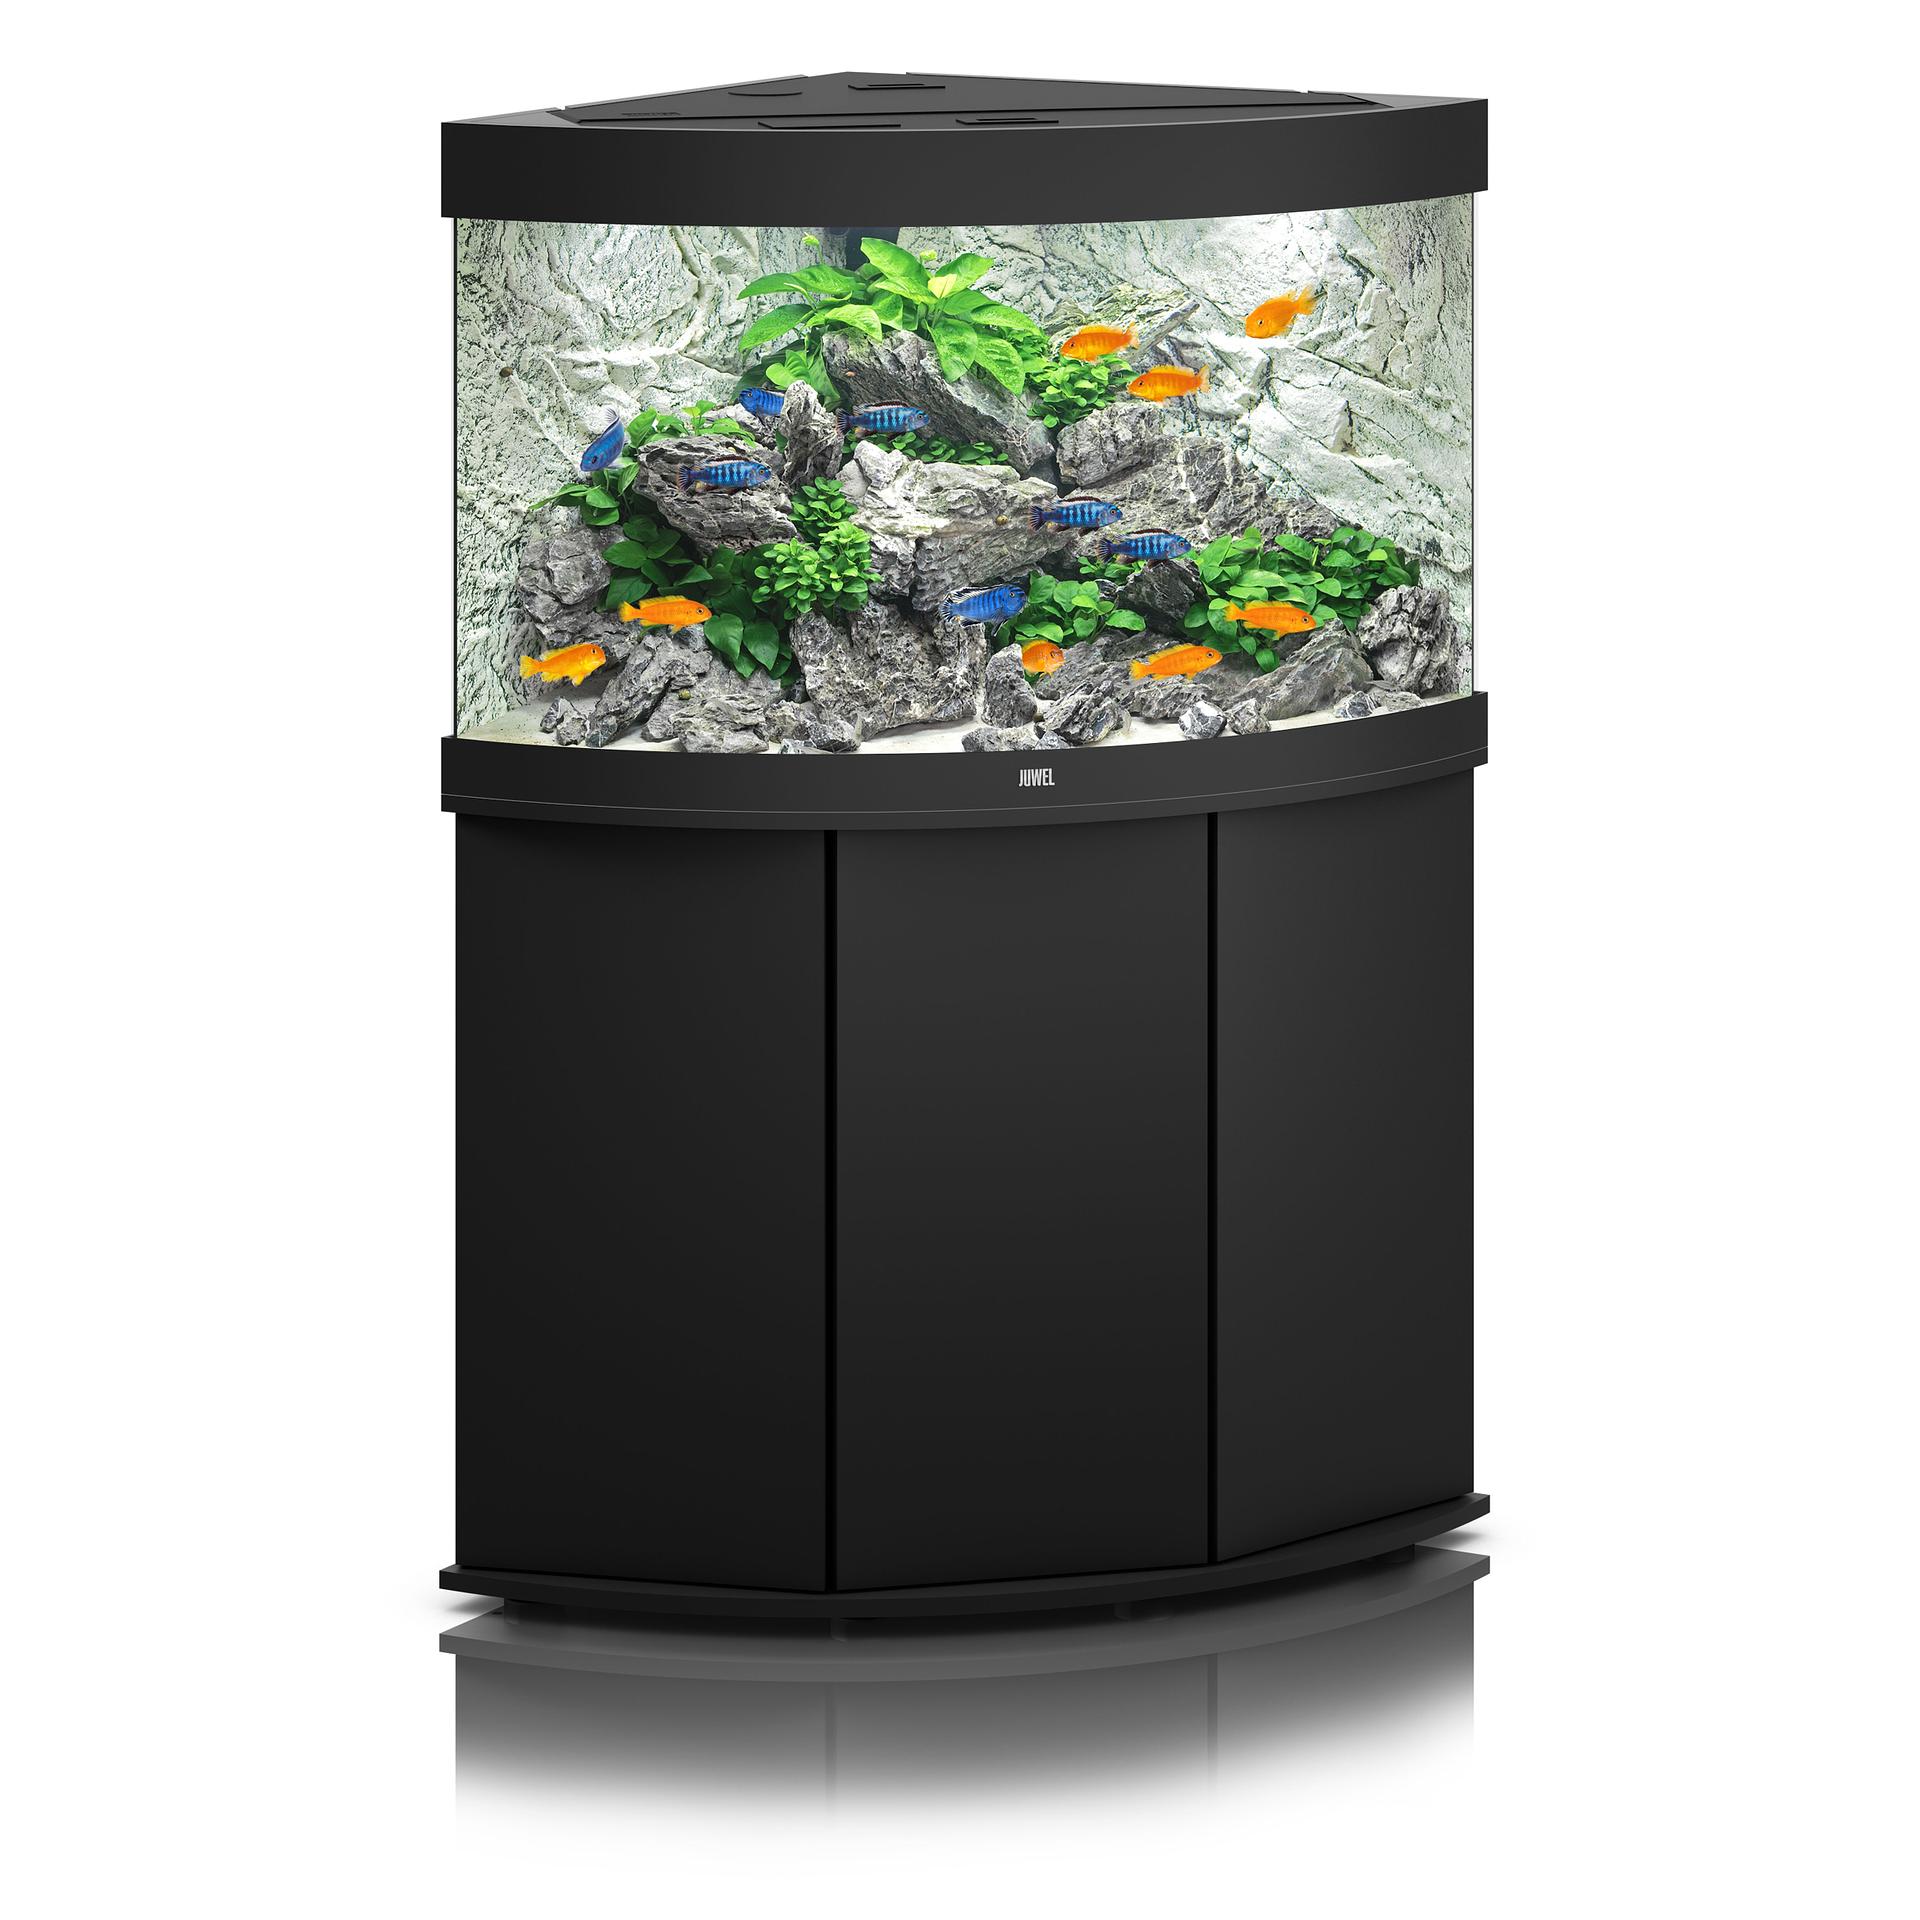 Juwel Aquarium Trigon 190 Kombination, schwarz-weiss